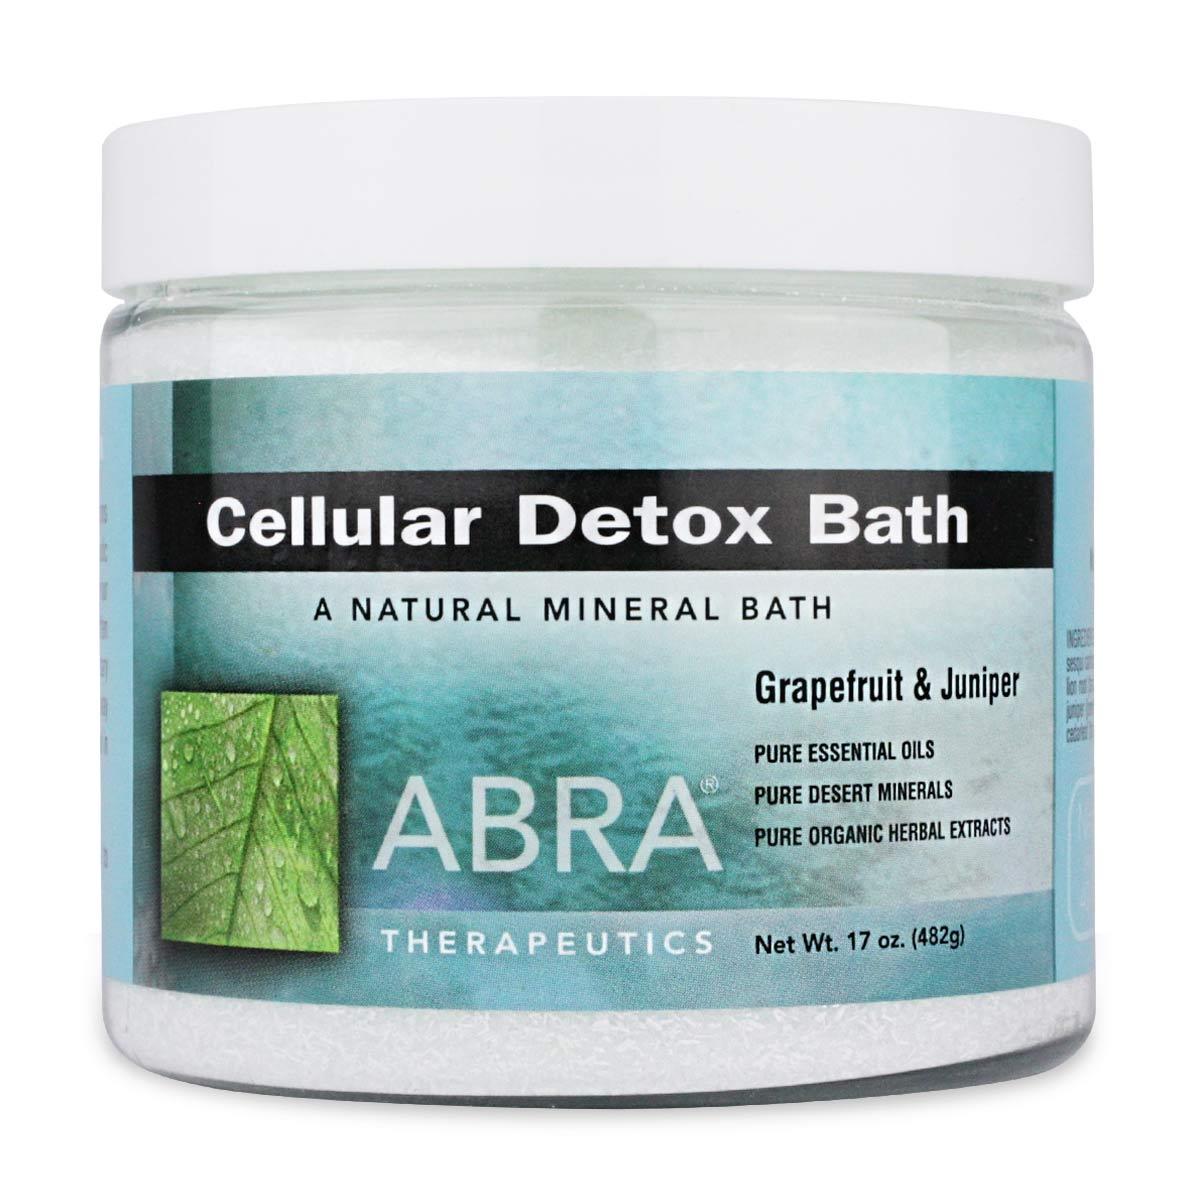 Primary image of Cellular Detox Bath